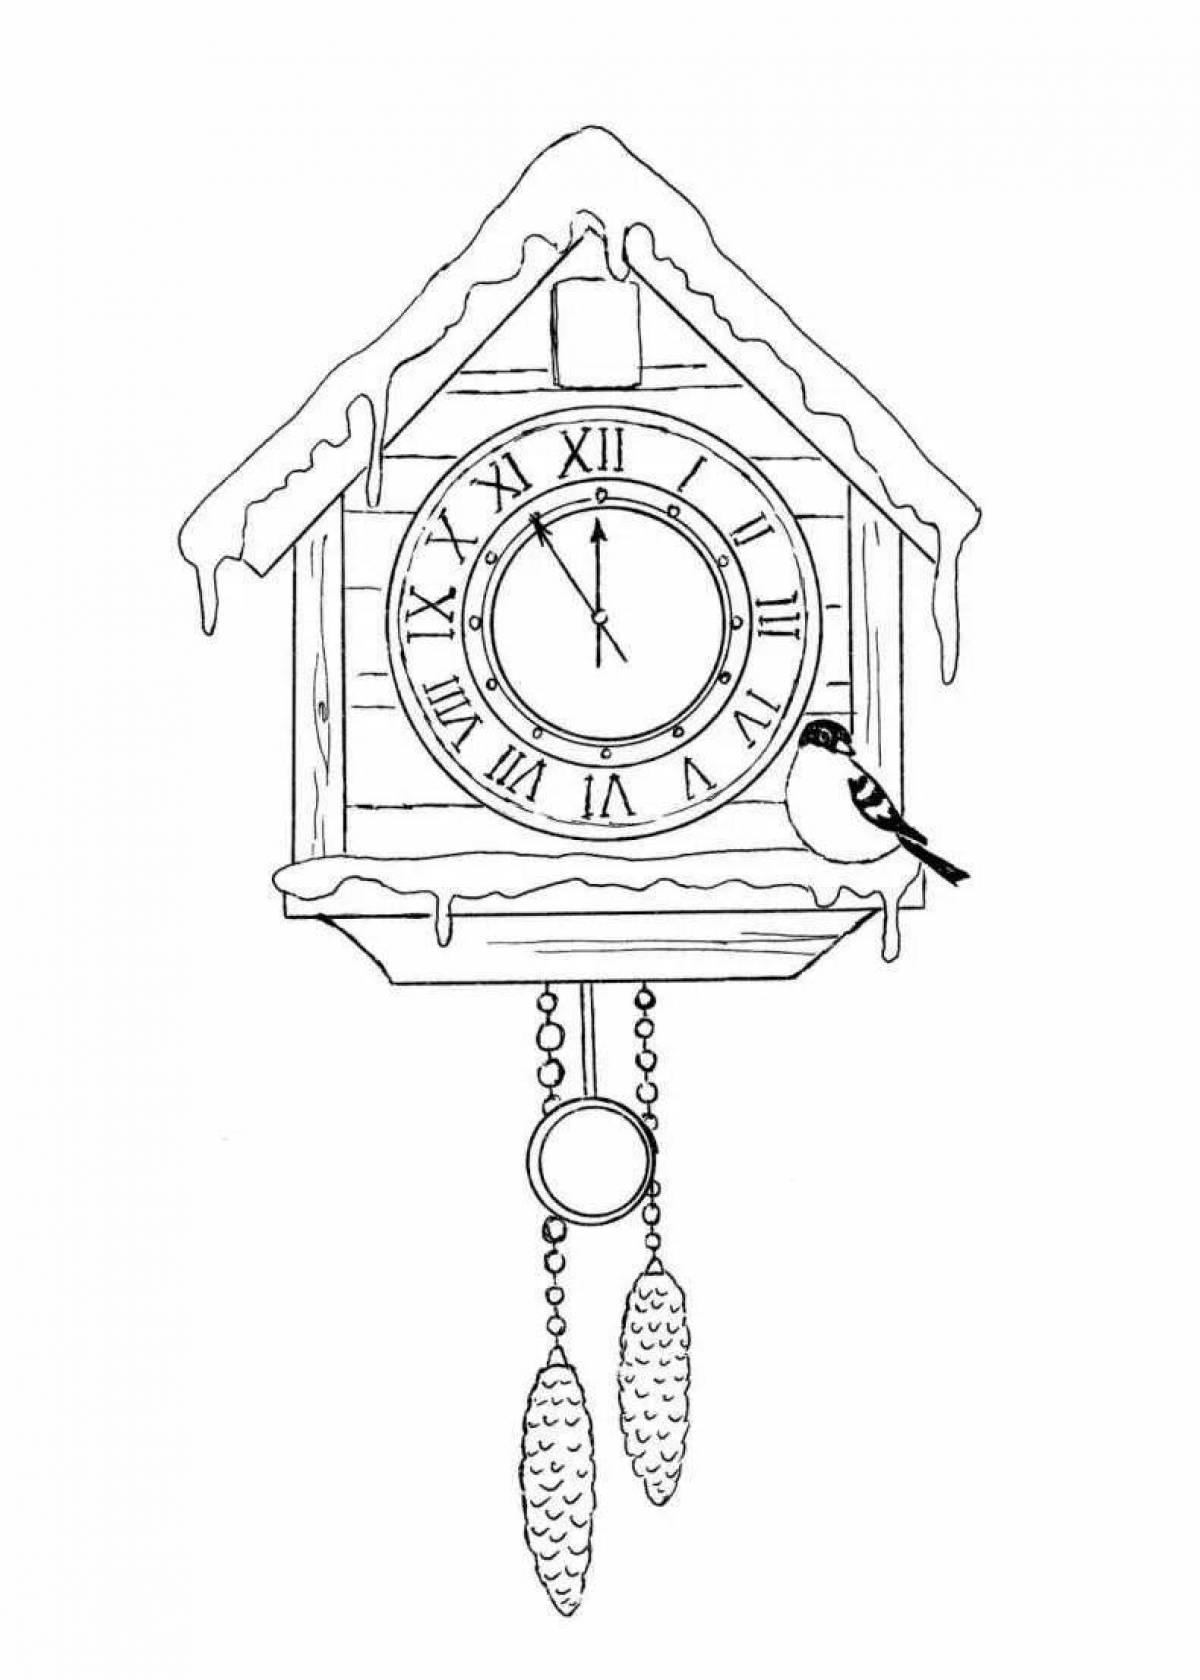 Coloring page elegant cuckoo clock